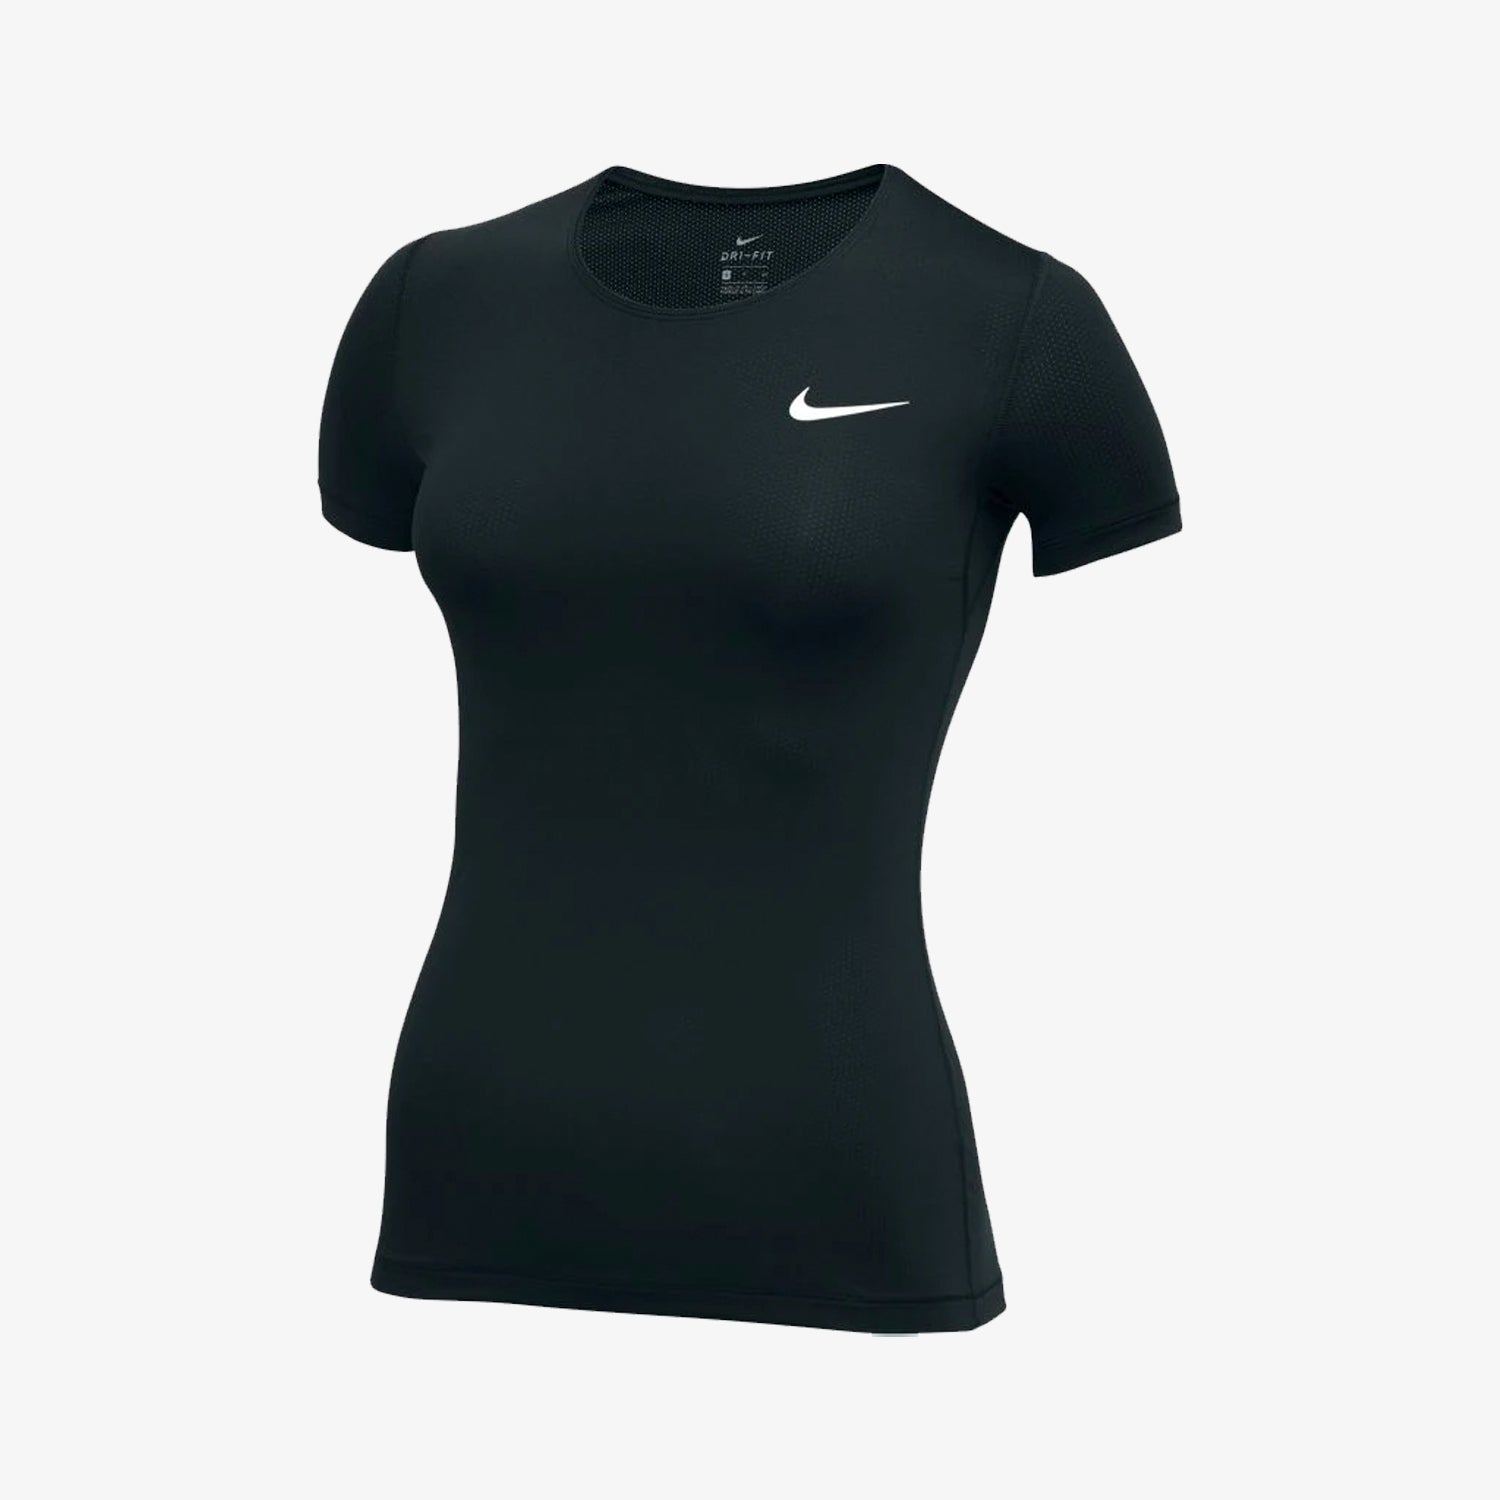 sentar repertorio herramienta Nike Pro Women's Short-Sleeve Compression Top